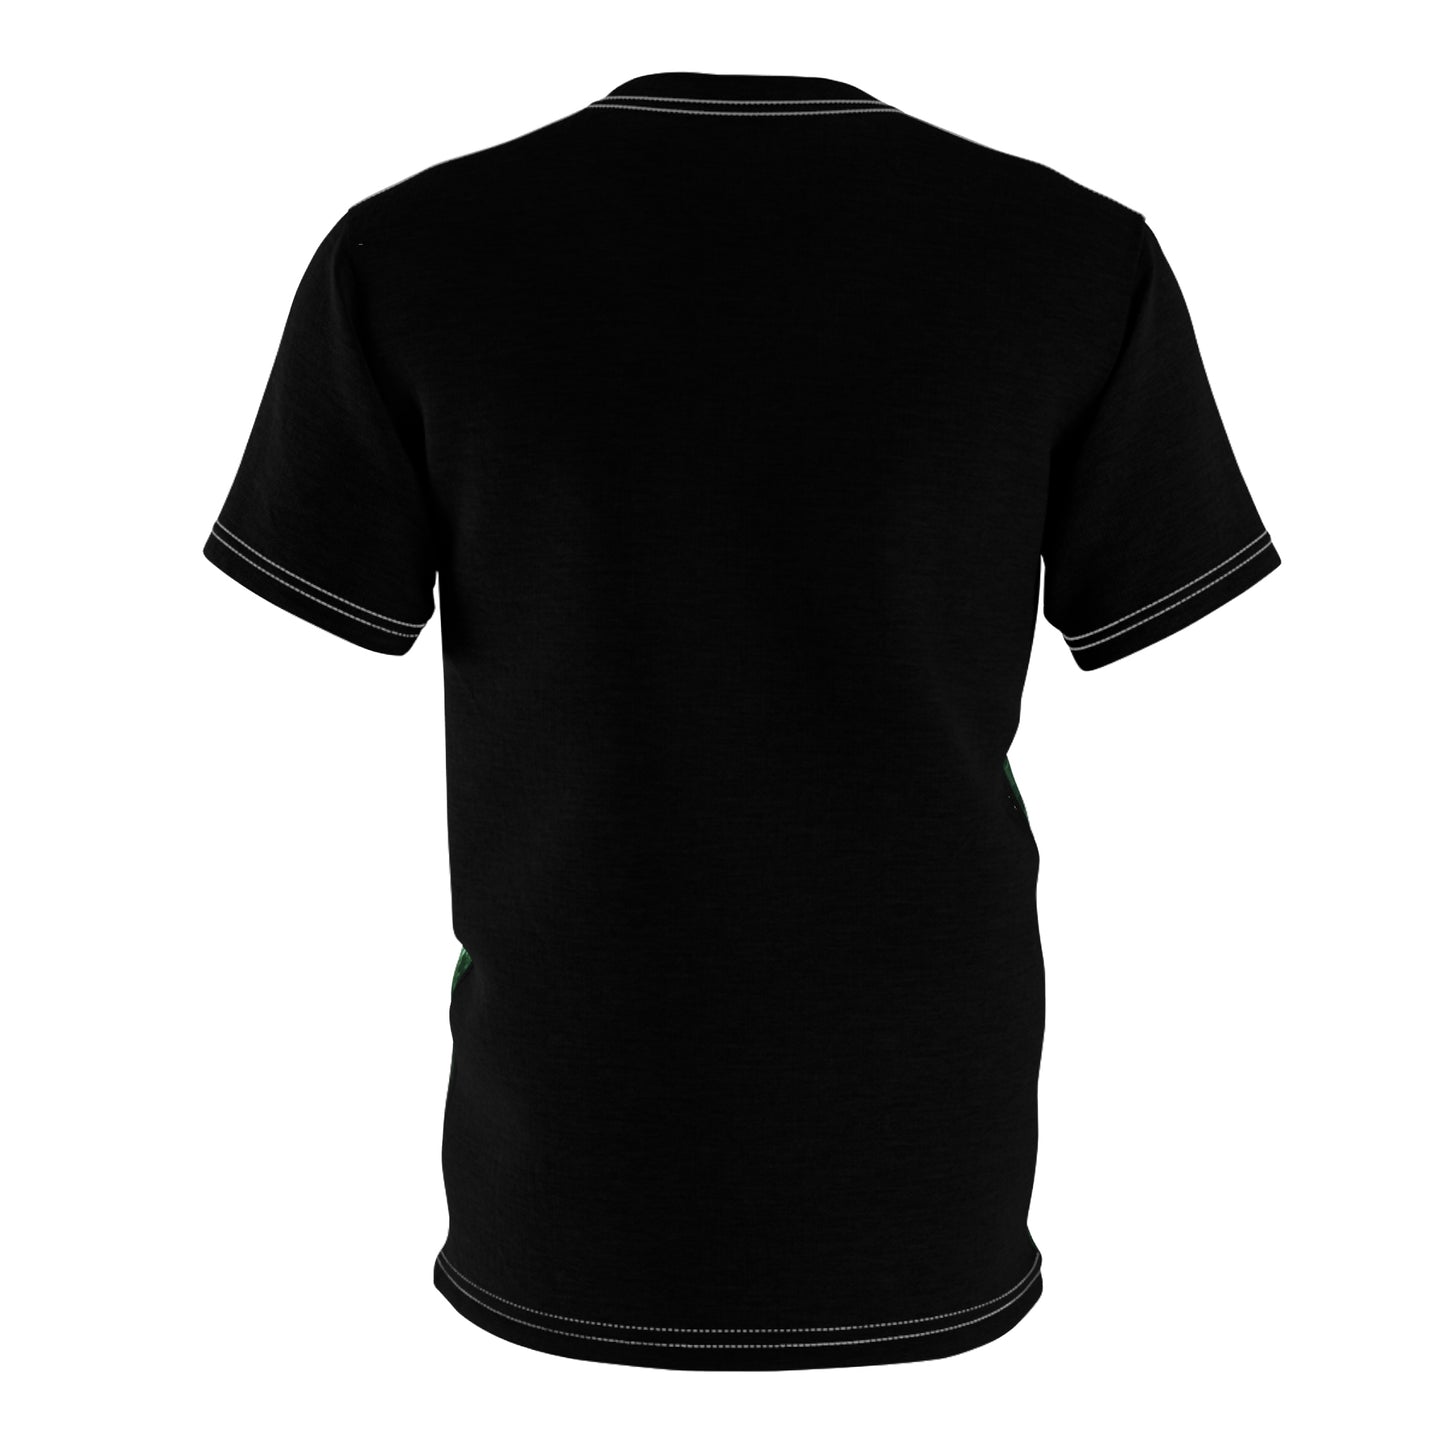 Shadow Storm - Unisex All-Over Print Cut & Sew T-Shirt